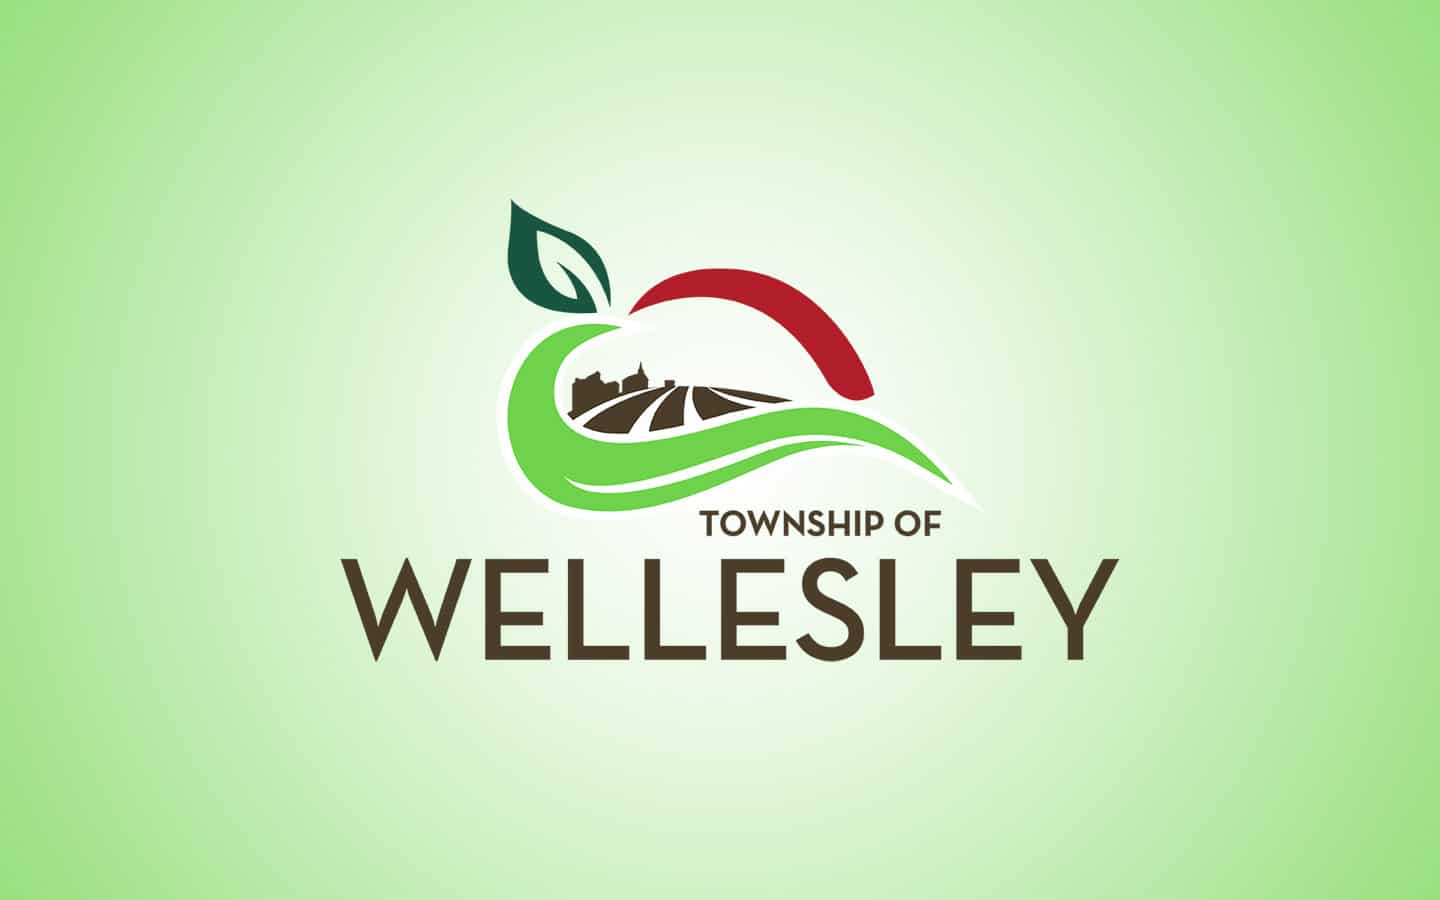 Developer unveils plan for 166-unit subdivision in Wellesley village